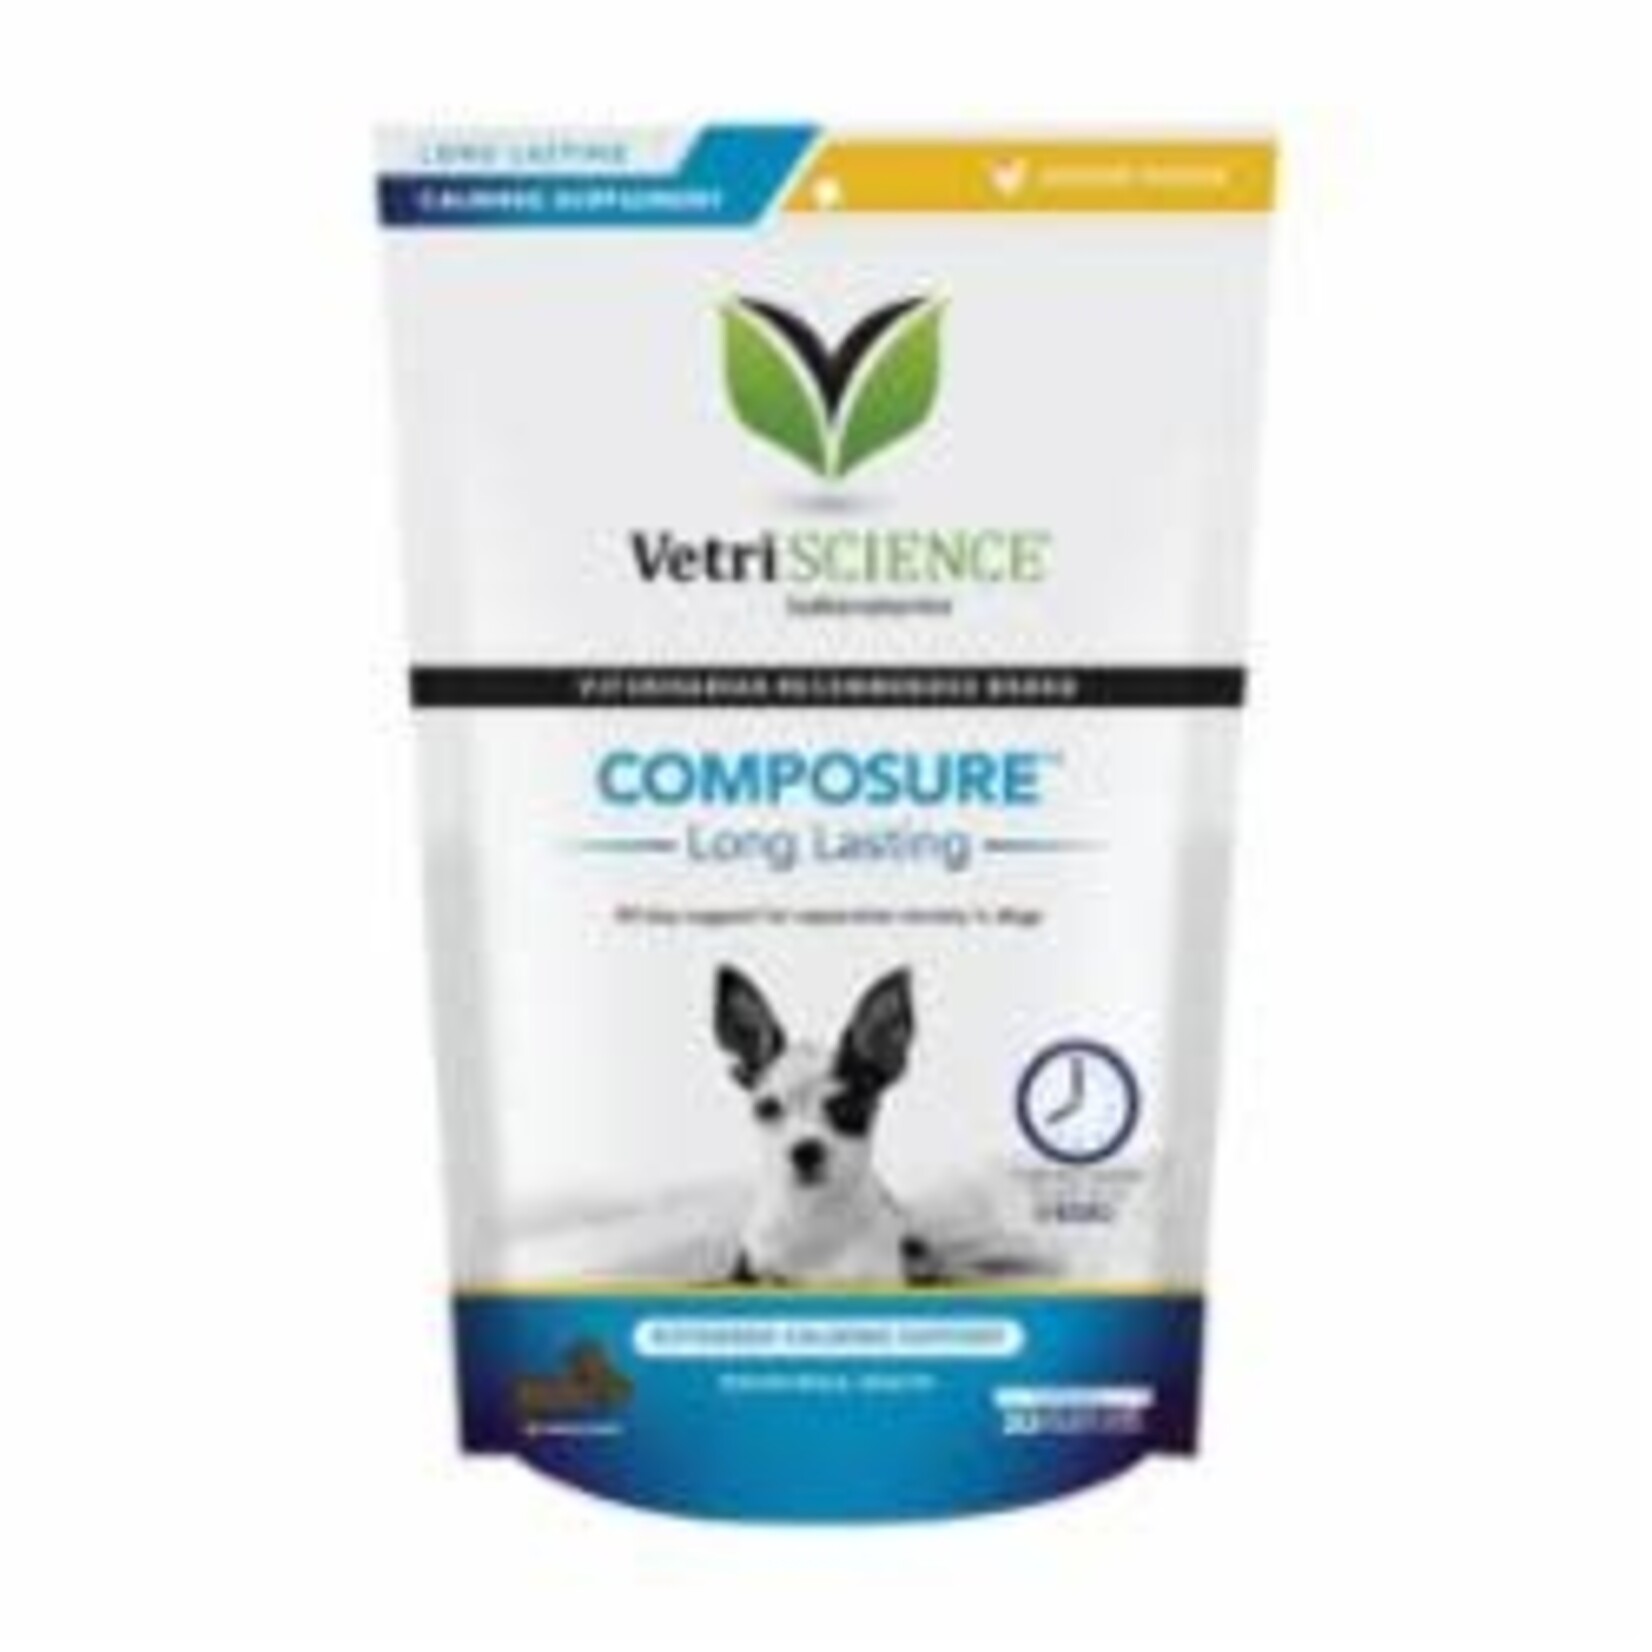 VetriScience 50ct Long Lasting Dog Composure VetriScience